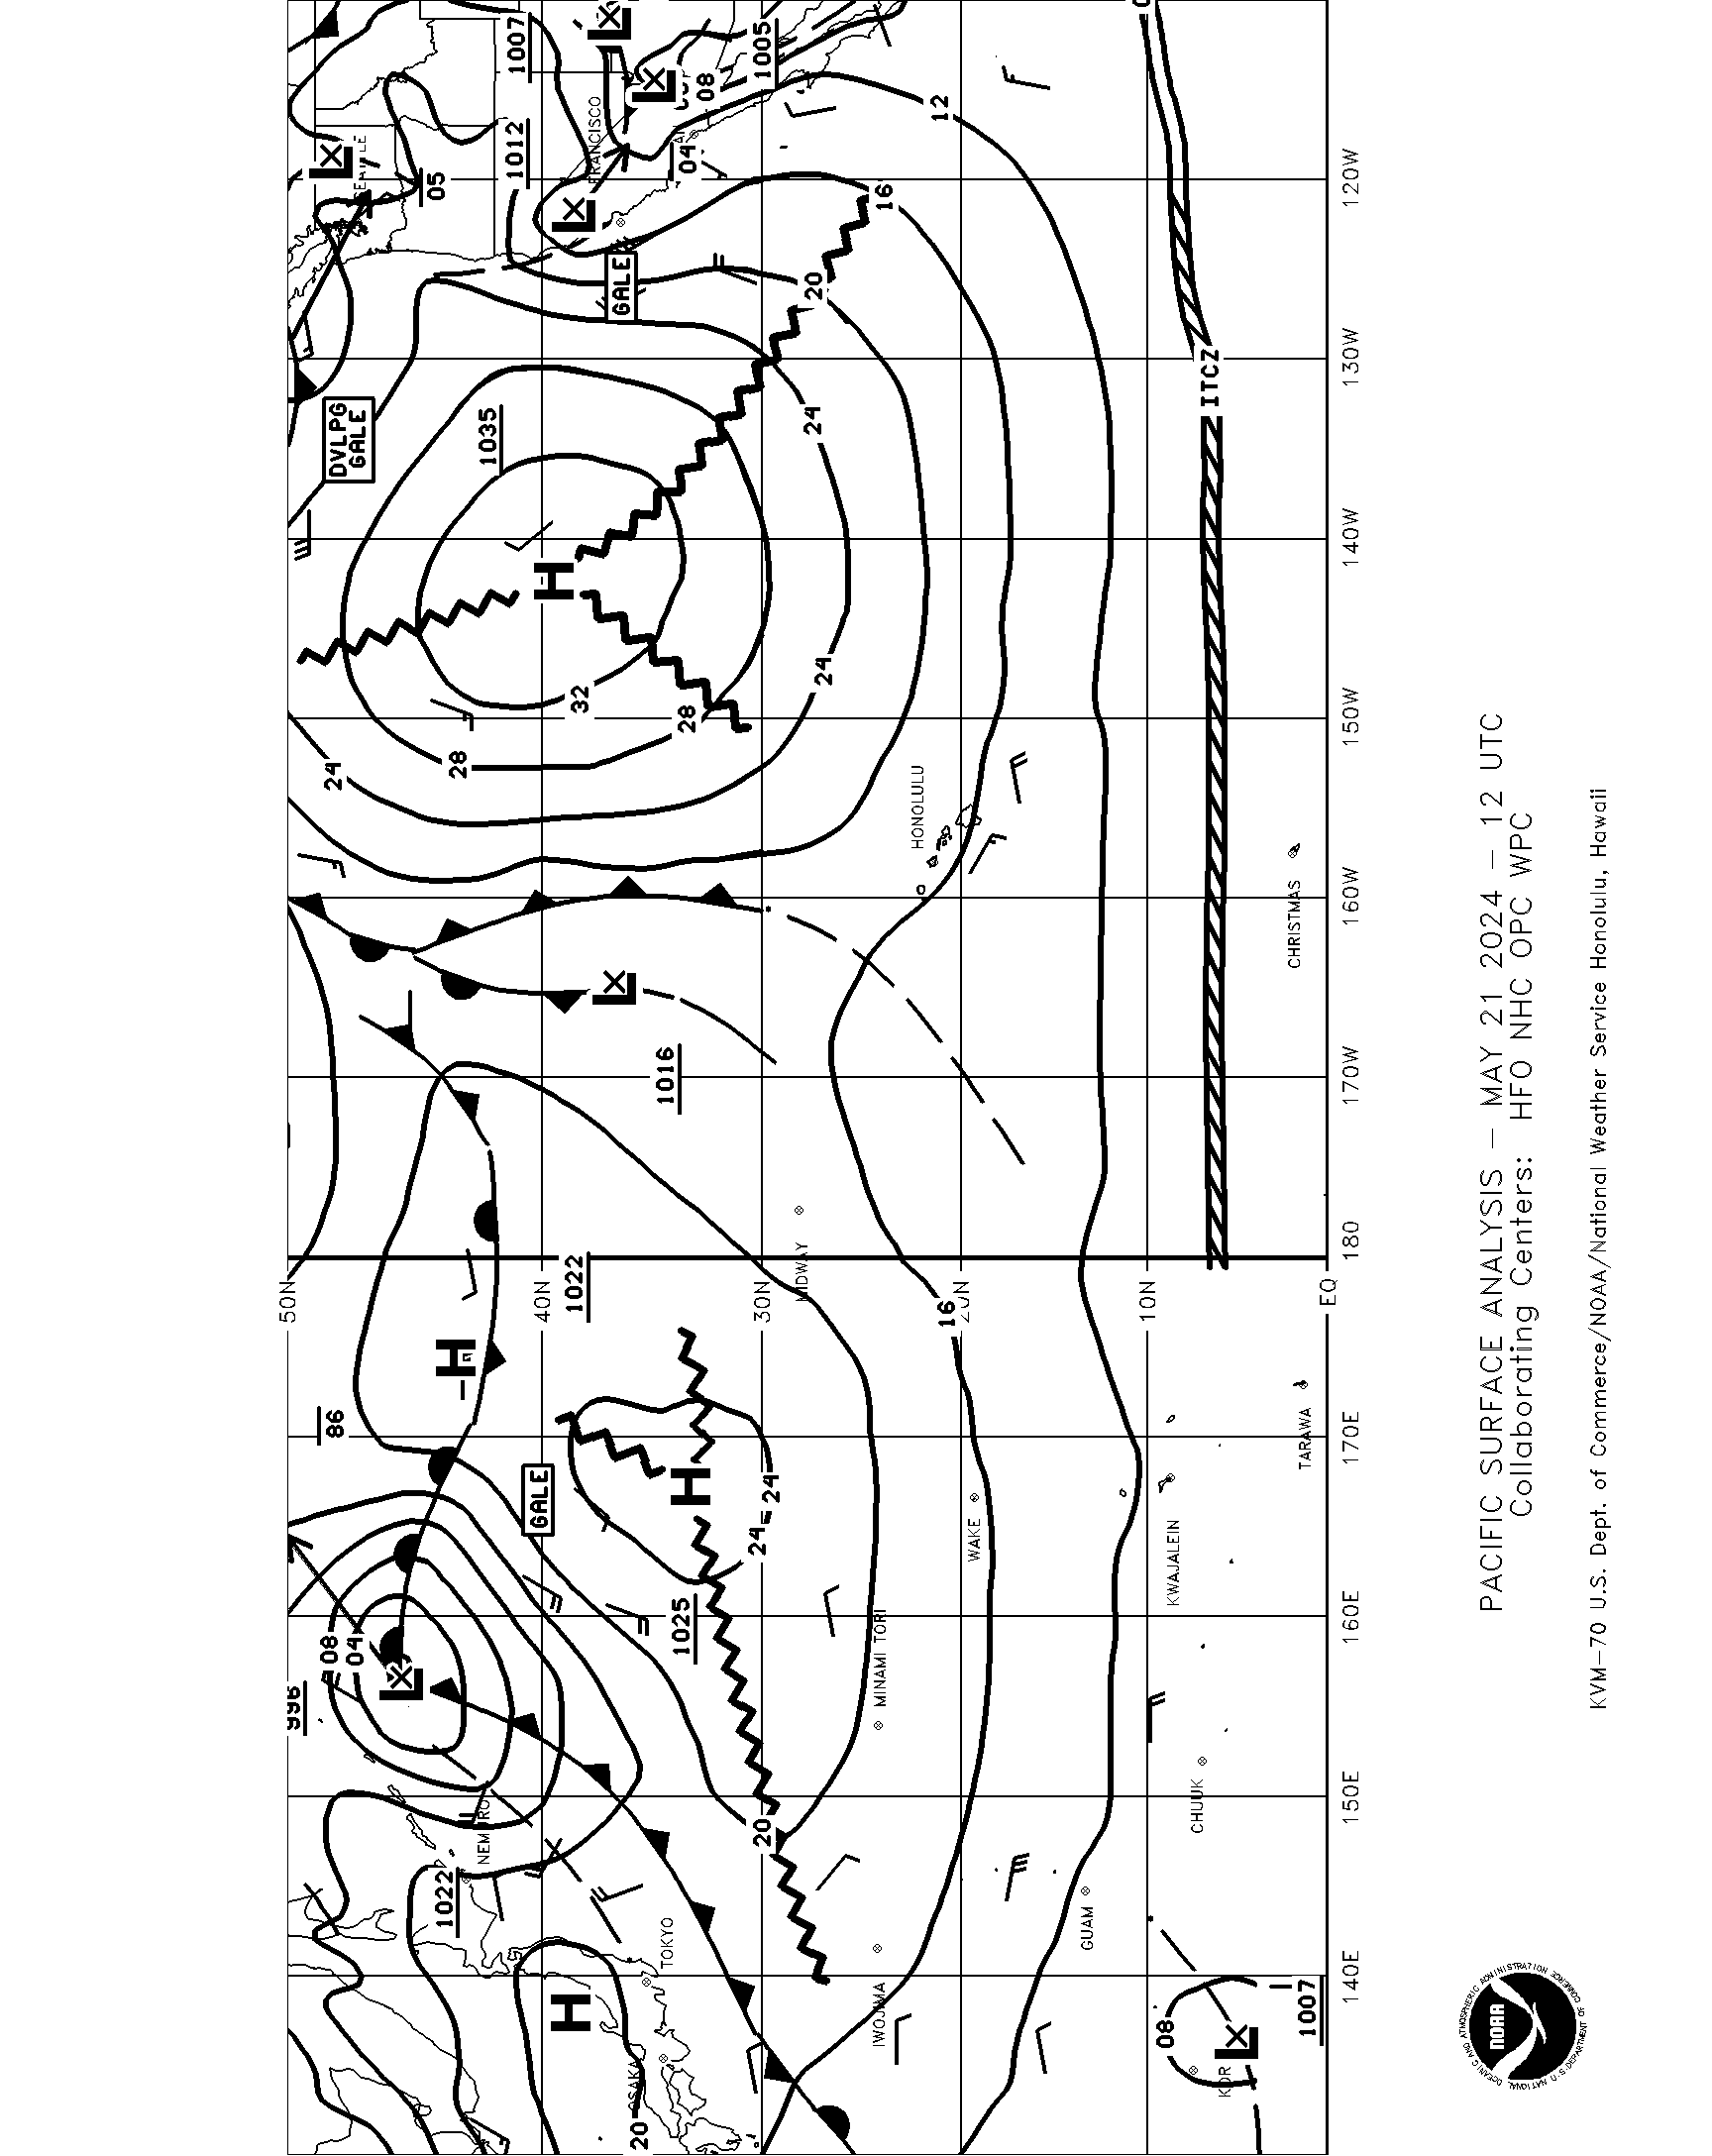 12Z Pacific Surface Analysis EQ-50N 110W-130E 